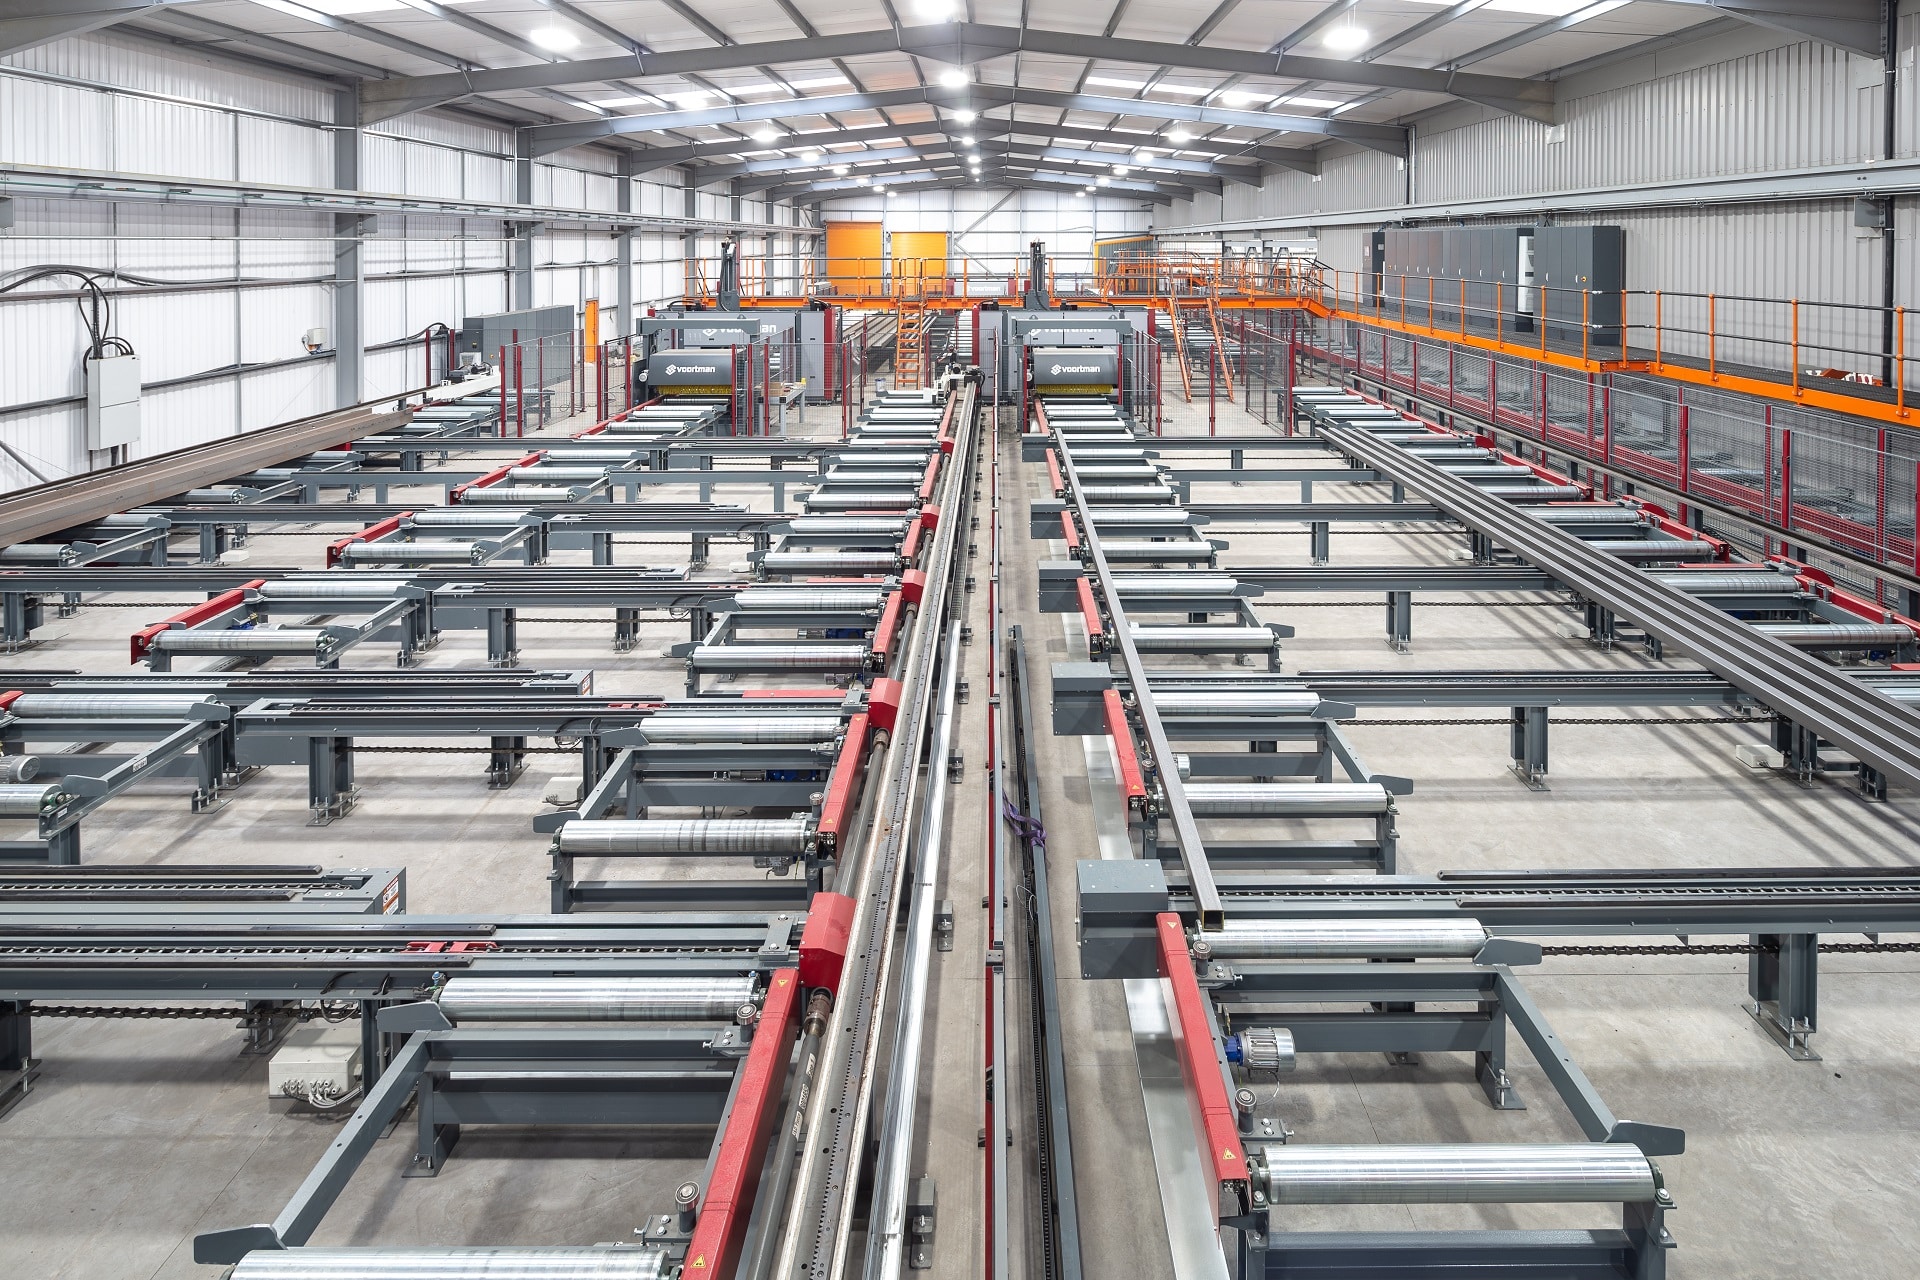 Voortman CNC facilities, Glengarnock | J & D Pierce